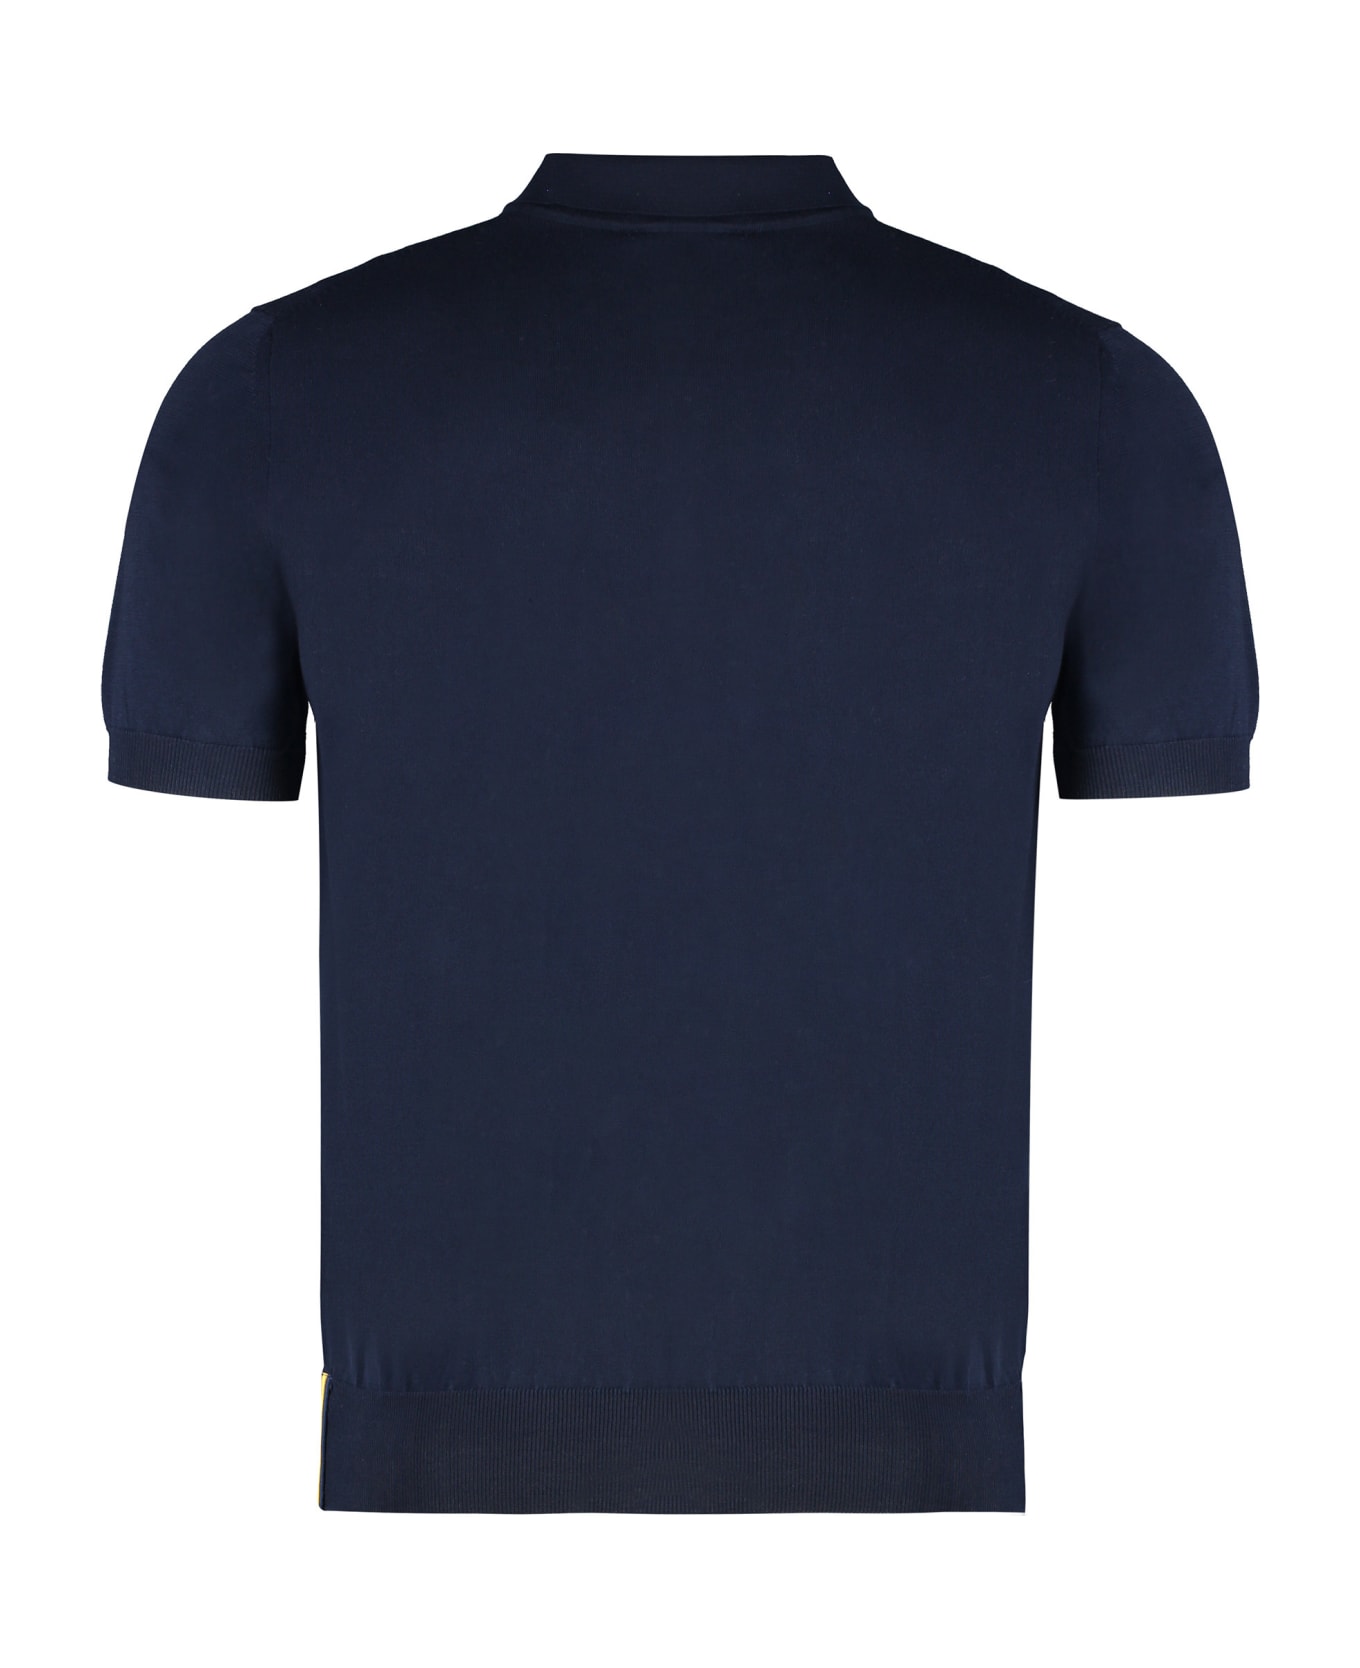 K-Way Pleyne Knitted Cotton Polo Shirt - Blue ポロシャツ